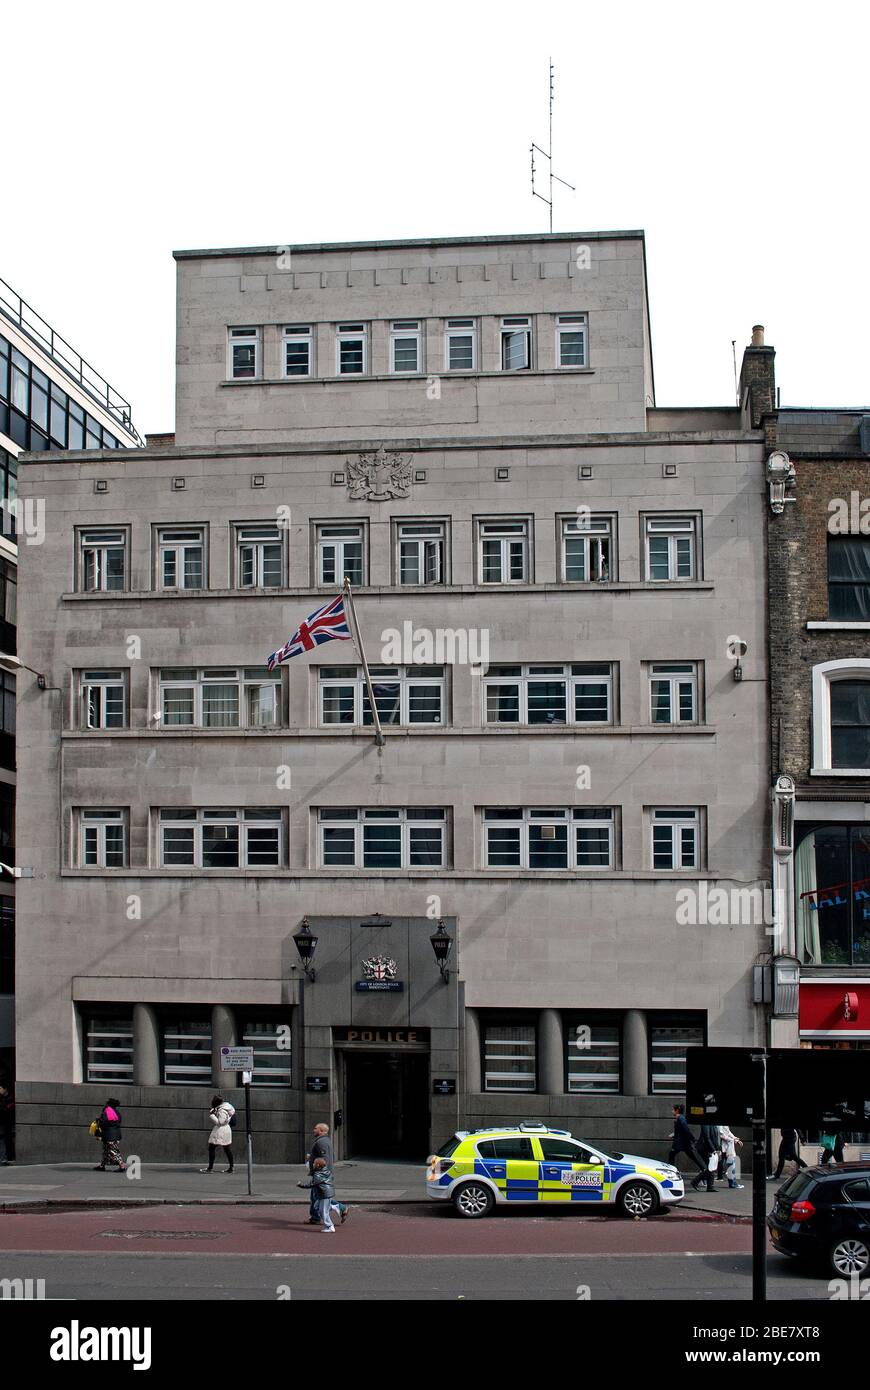 City of London Police Station 182 Bishopsgate, London EC2M 4NP by Vine & Vine Stock Photo